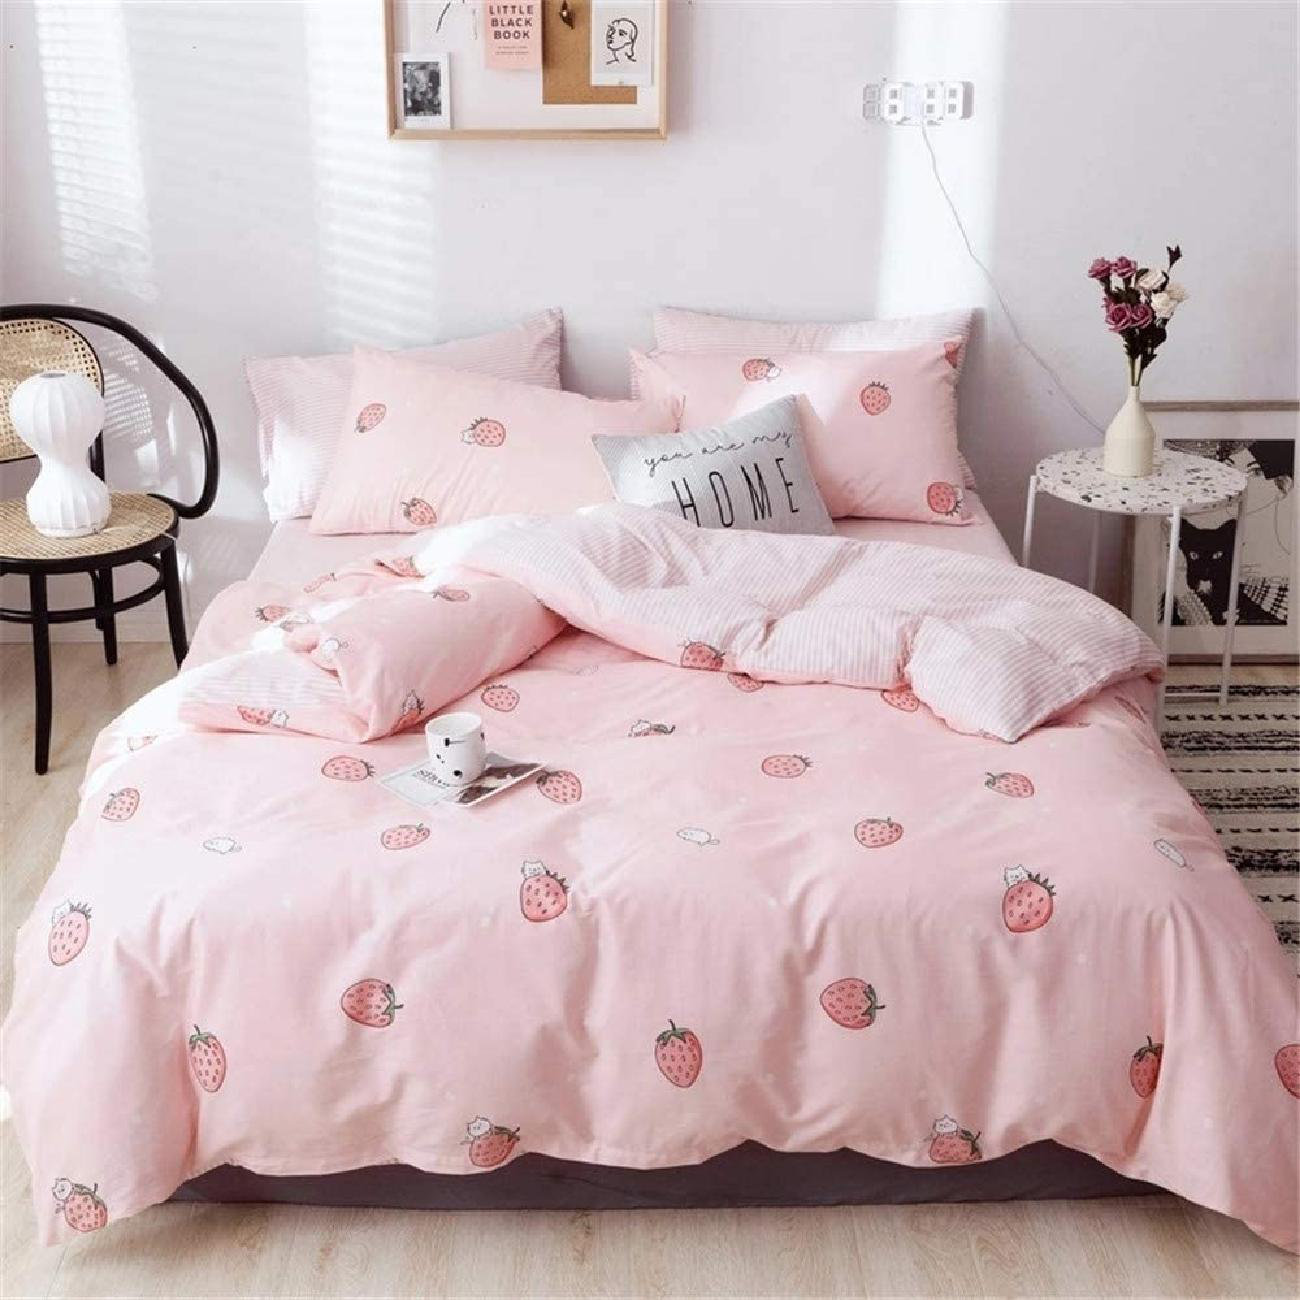 Duvet Cover and 2 Pillow Cases Linen Bedding Set Light Pink color US Queen + Standard Pillowcases